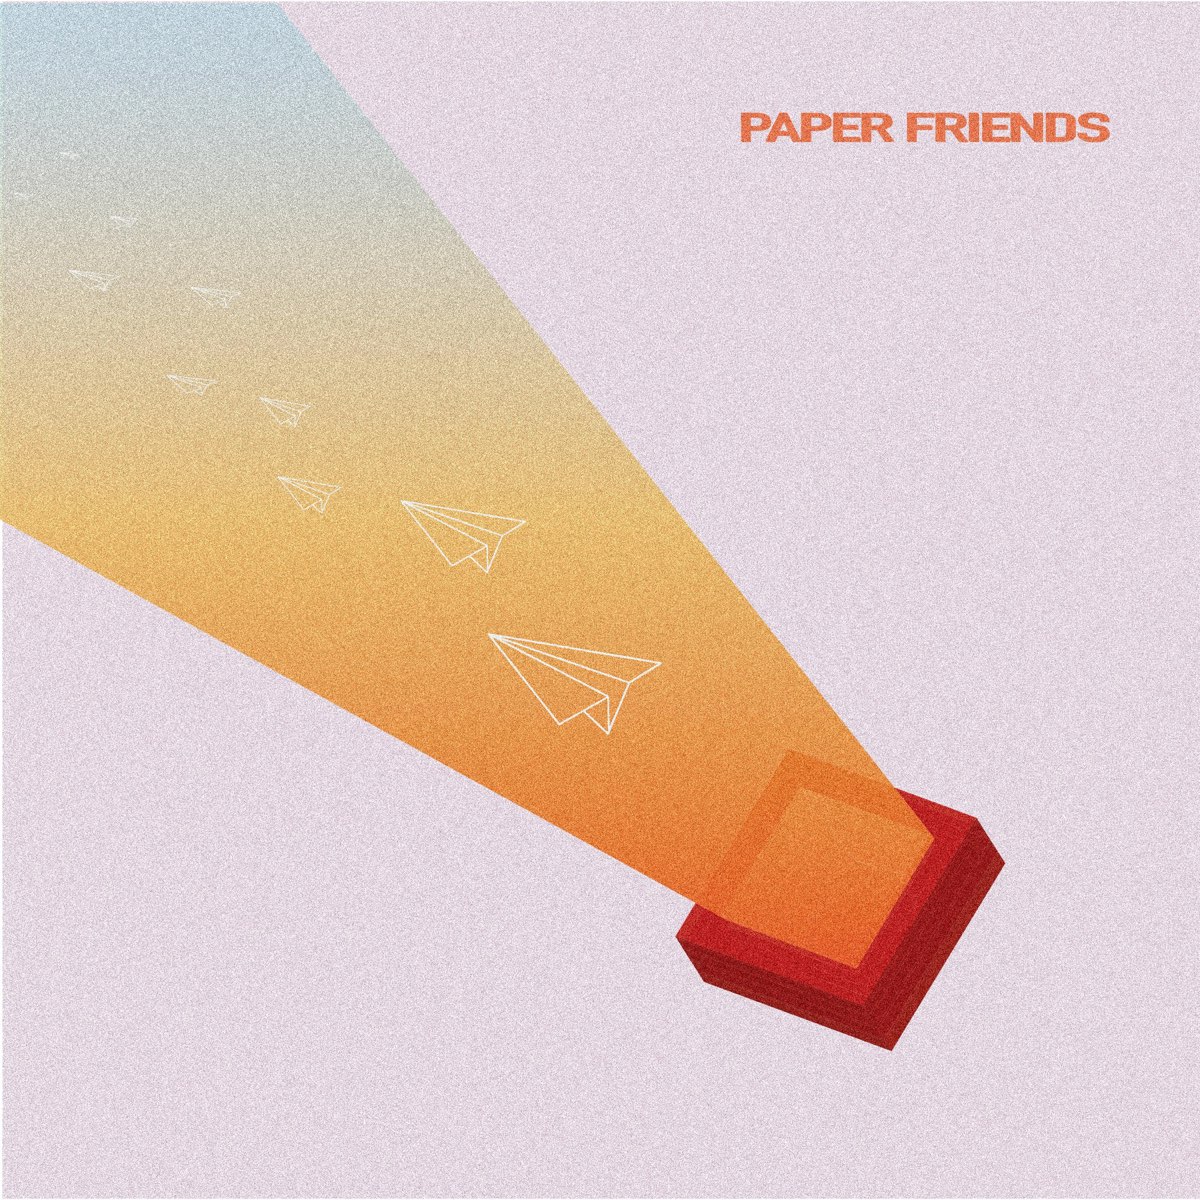 Paper friend. Paper for Friendship. Kuririn paper Frend. Paper friends